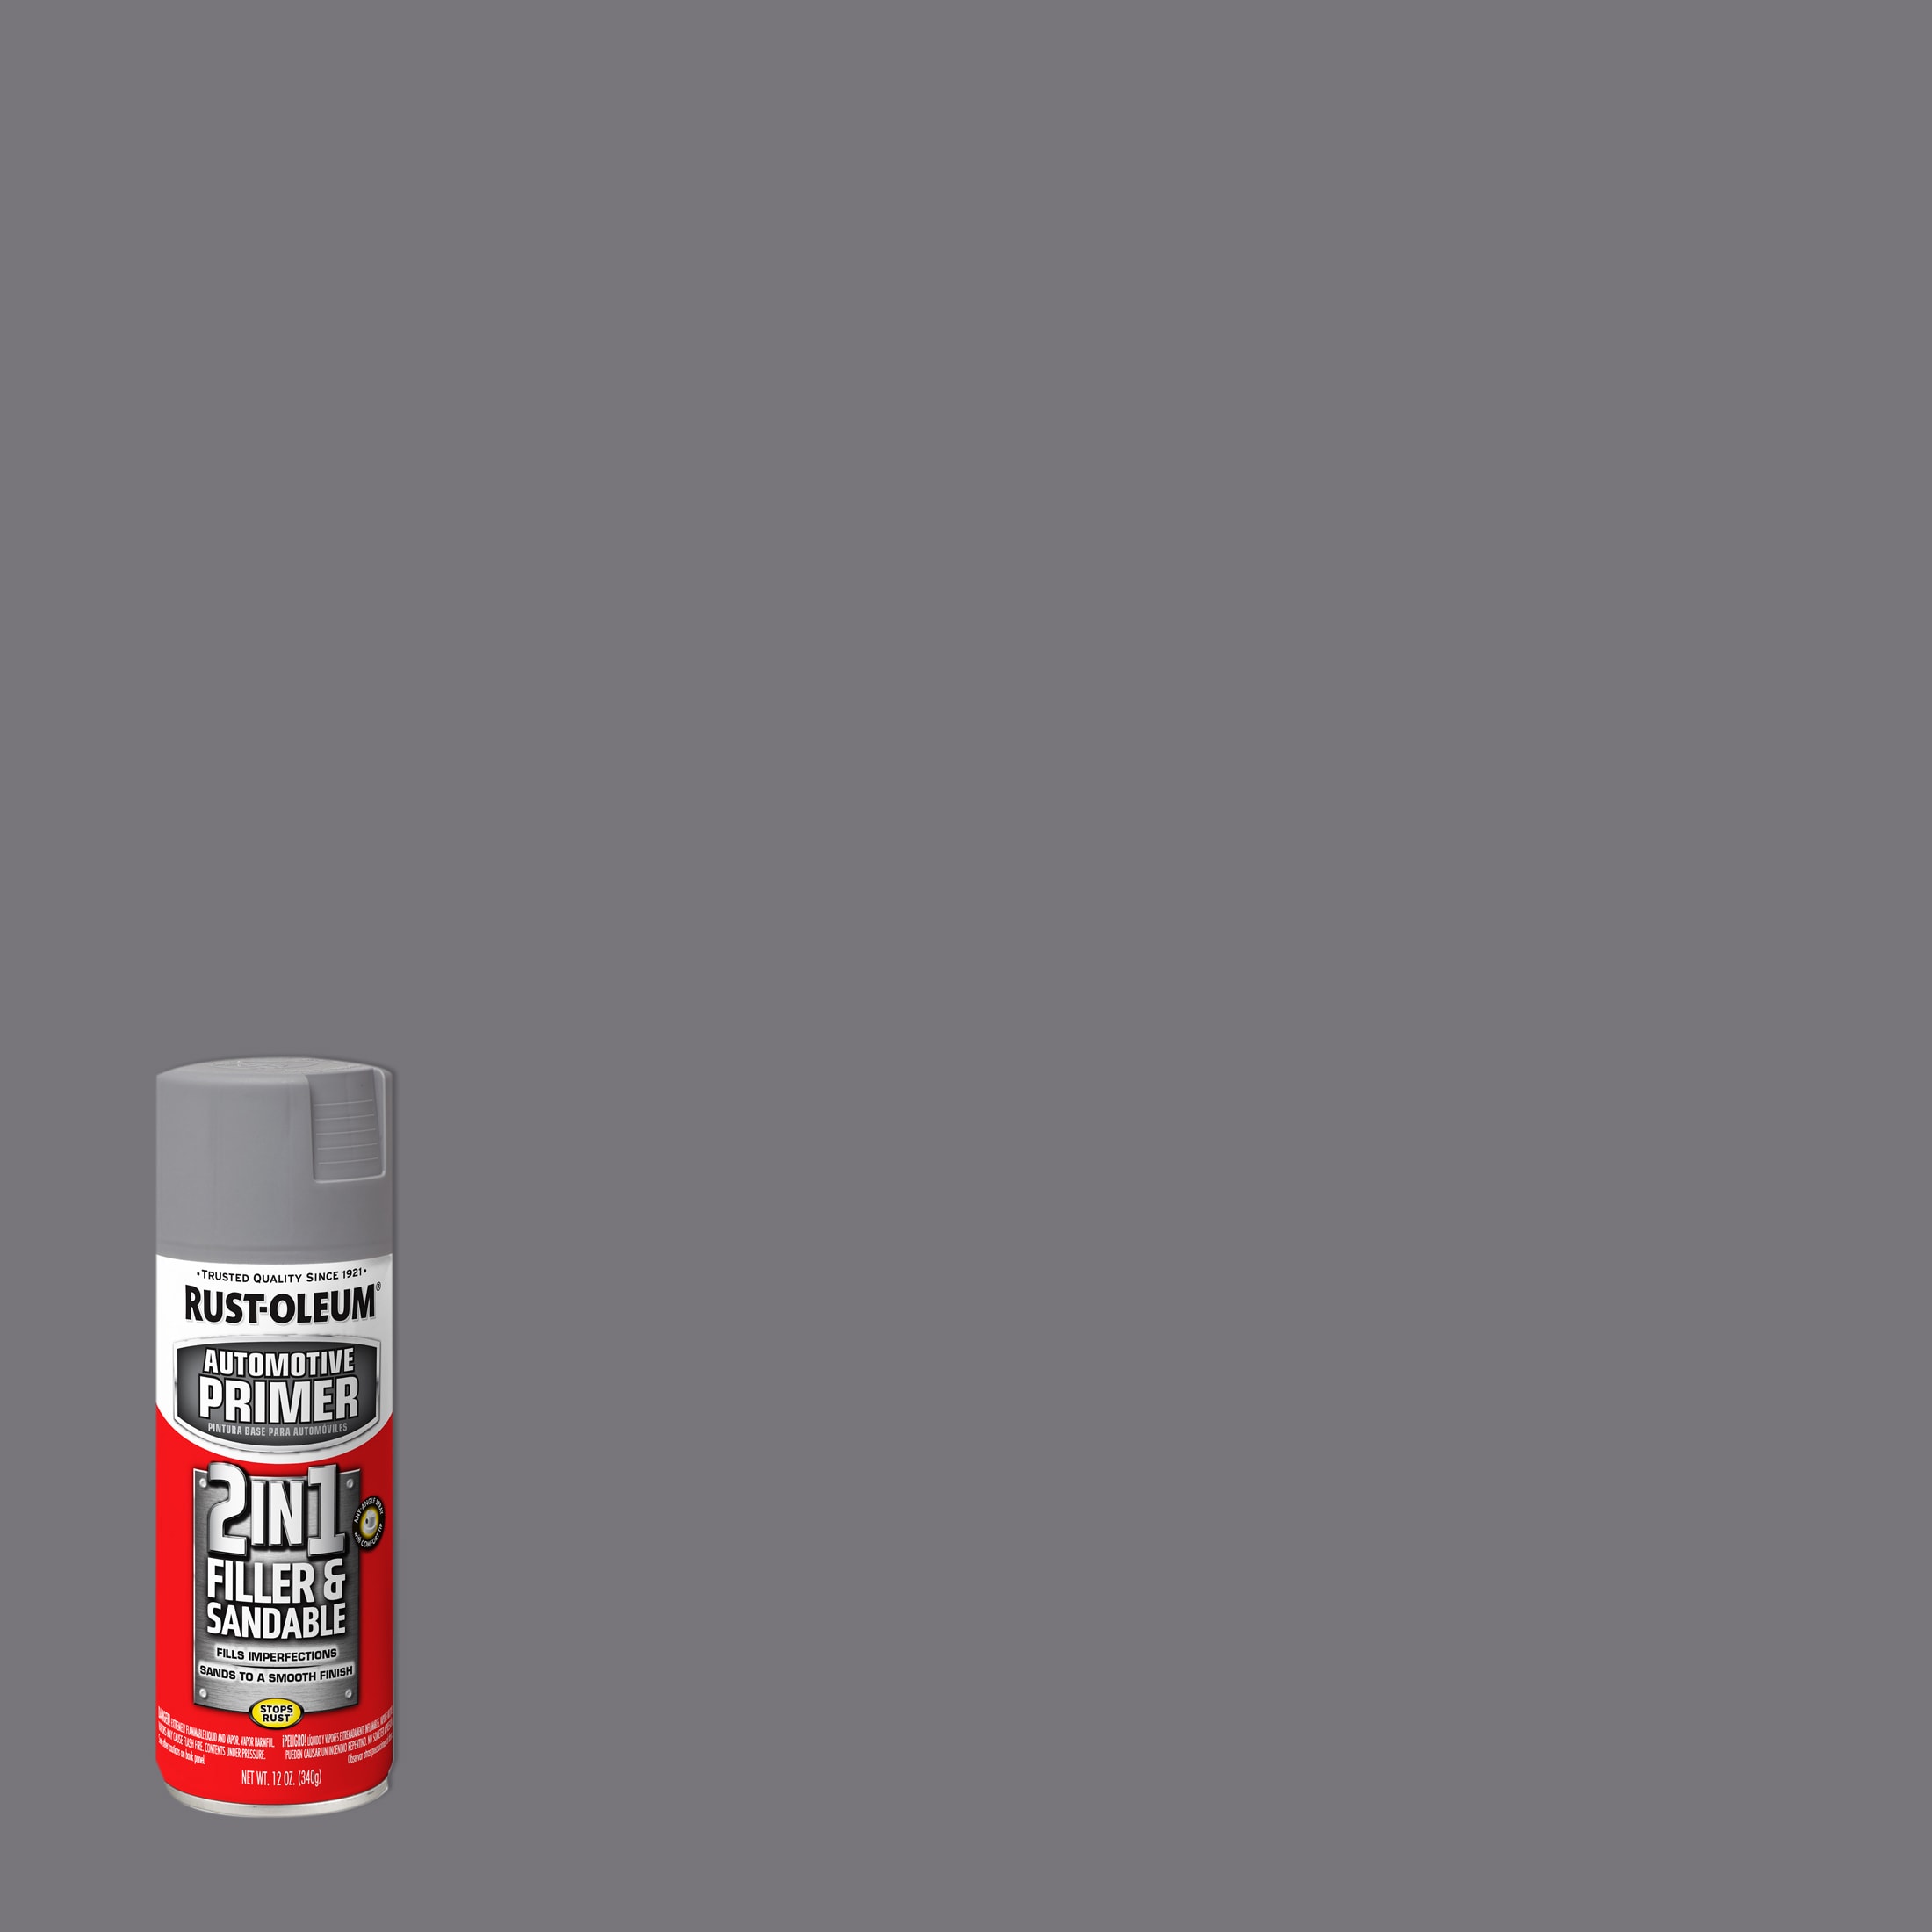 Krylon COLORmaxx Flat White Spray Primer (NET WT. 12-oz)